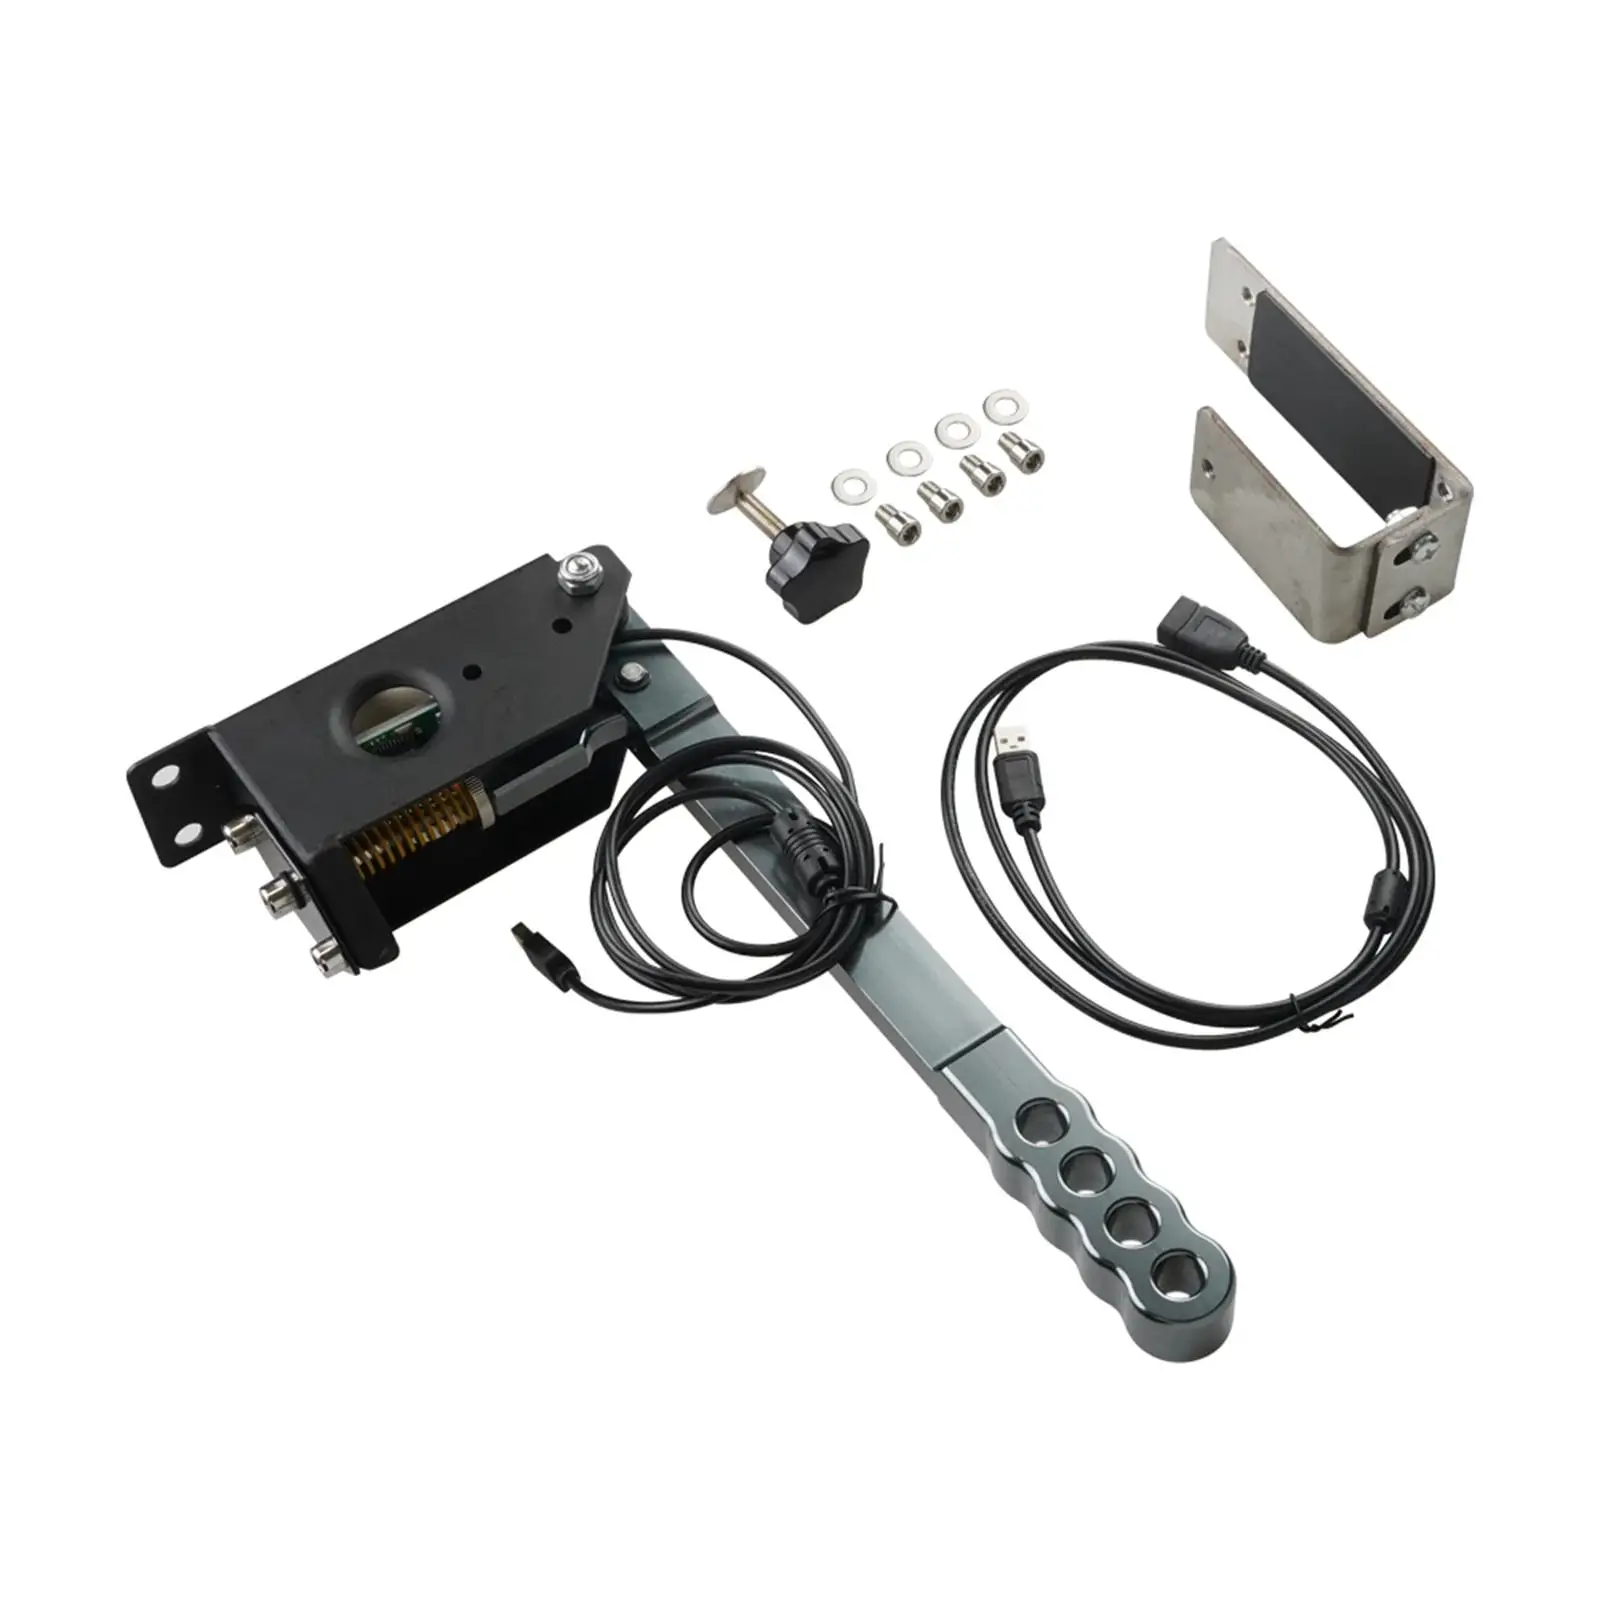 Handbrake Anti Wear Plug and Play USB Long Service Life Adjustable Game Peripherals Handbrake for Logitech G29 Racing Games